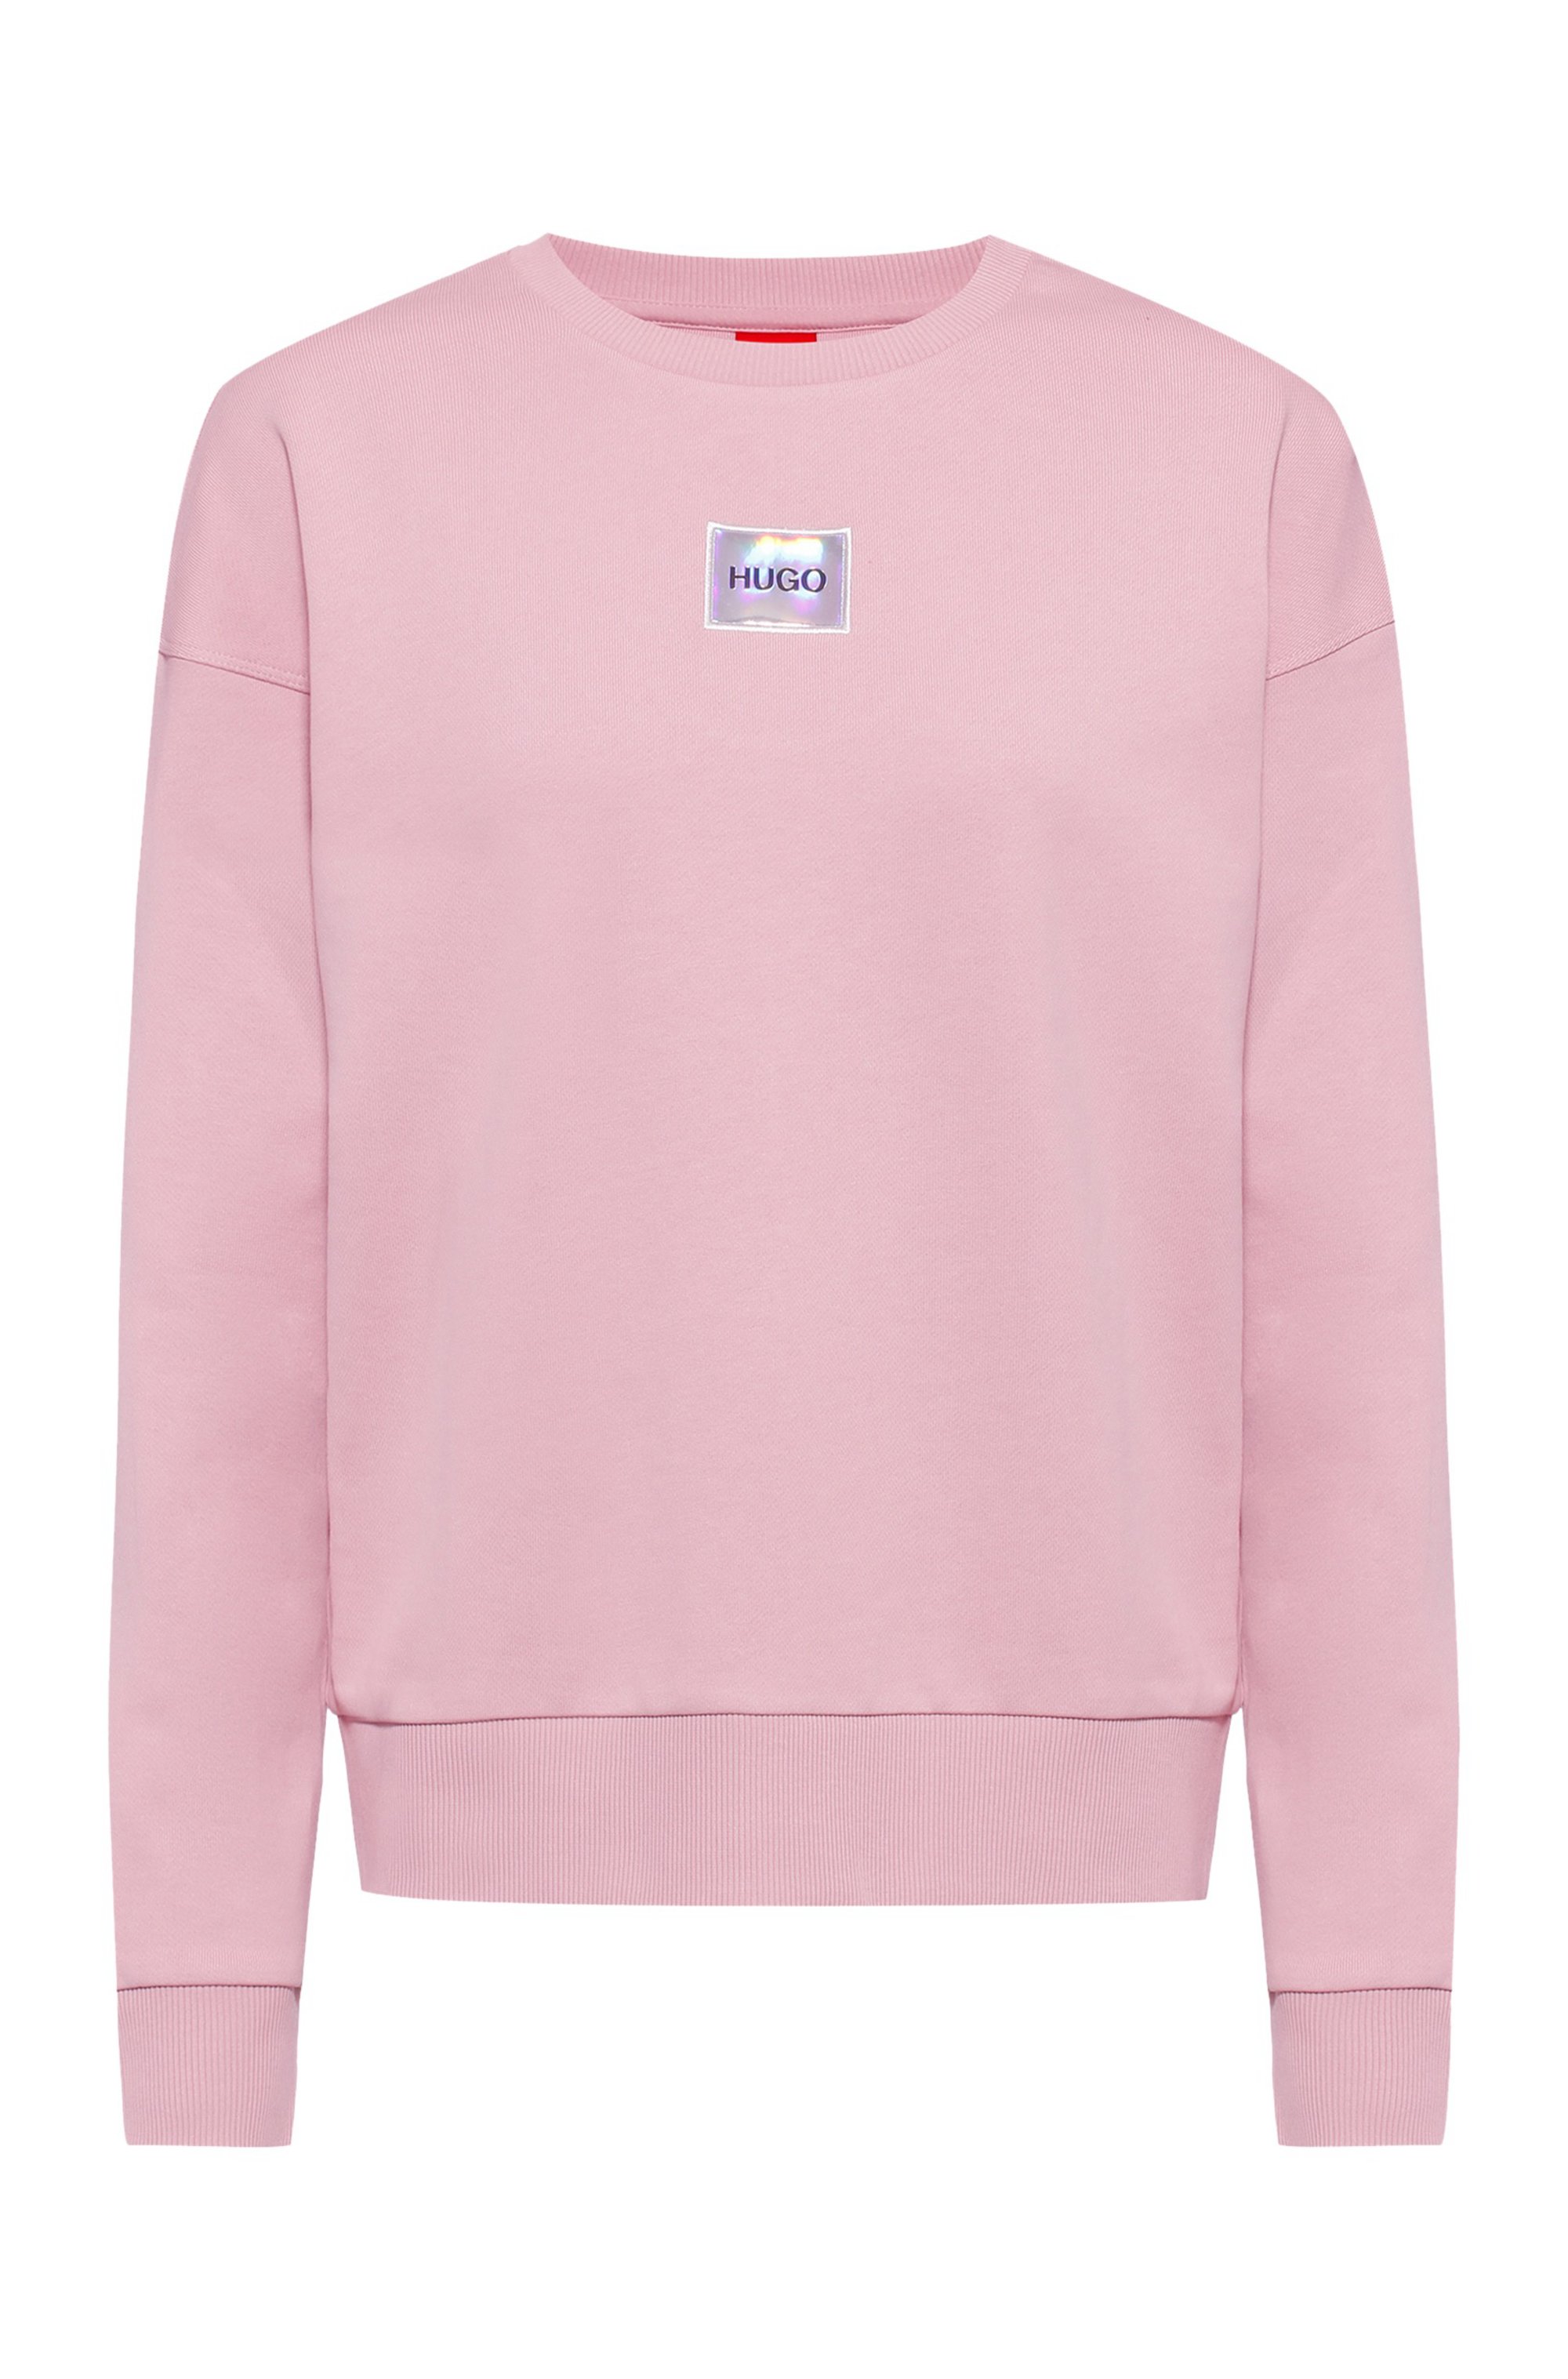 Regular-fit cotton sweatshirt with logo label, light pink